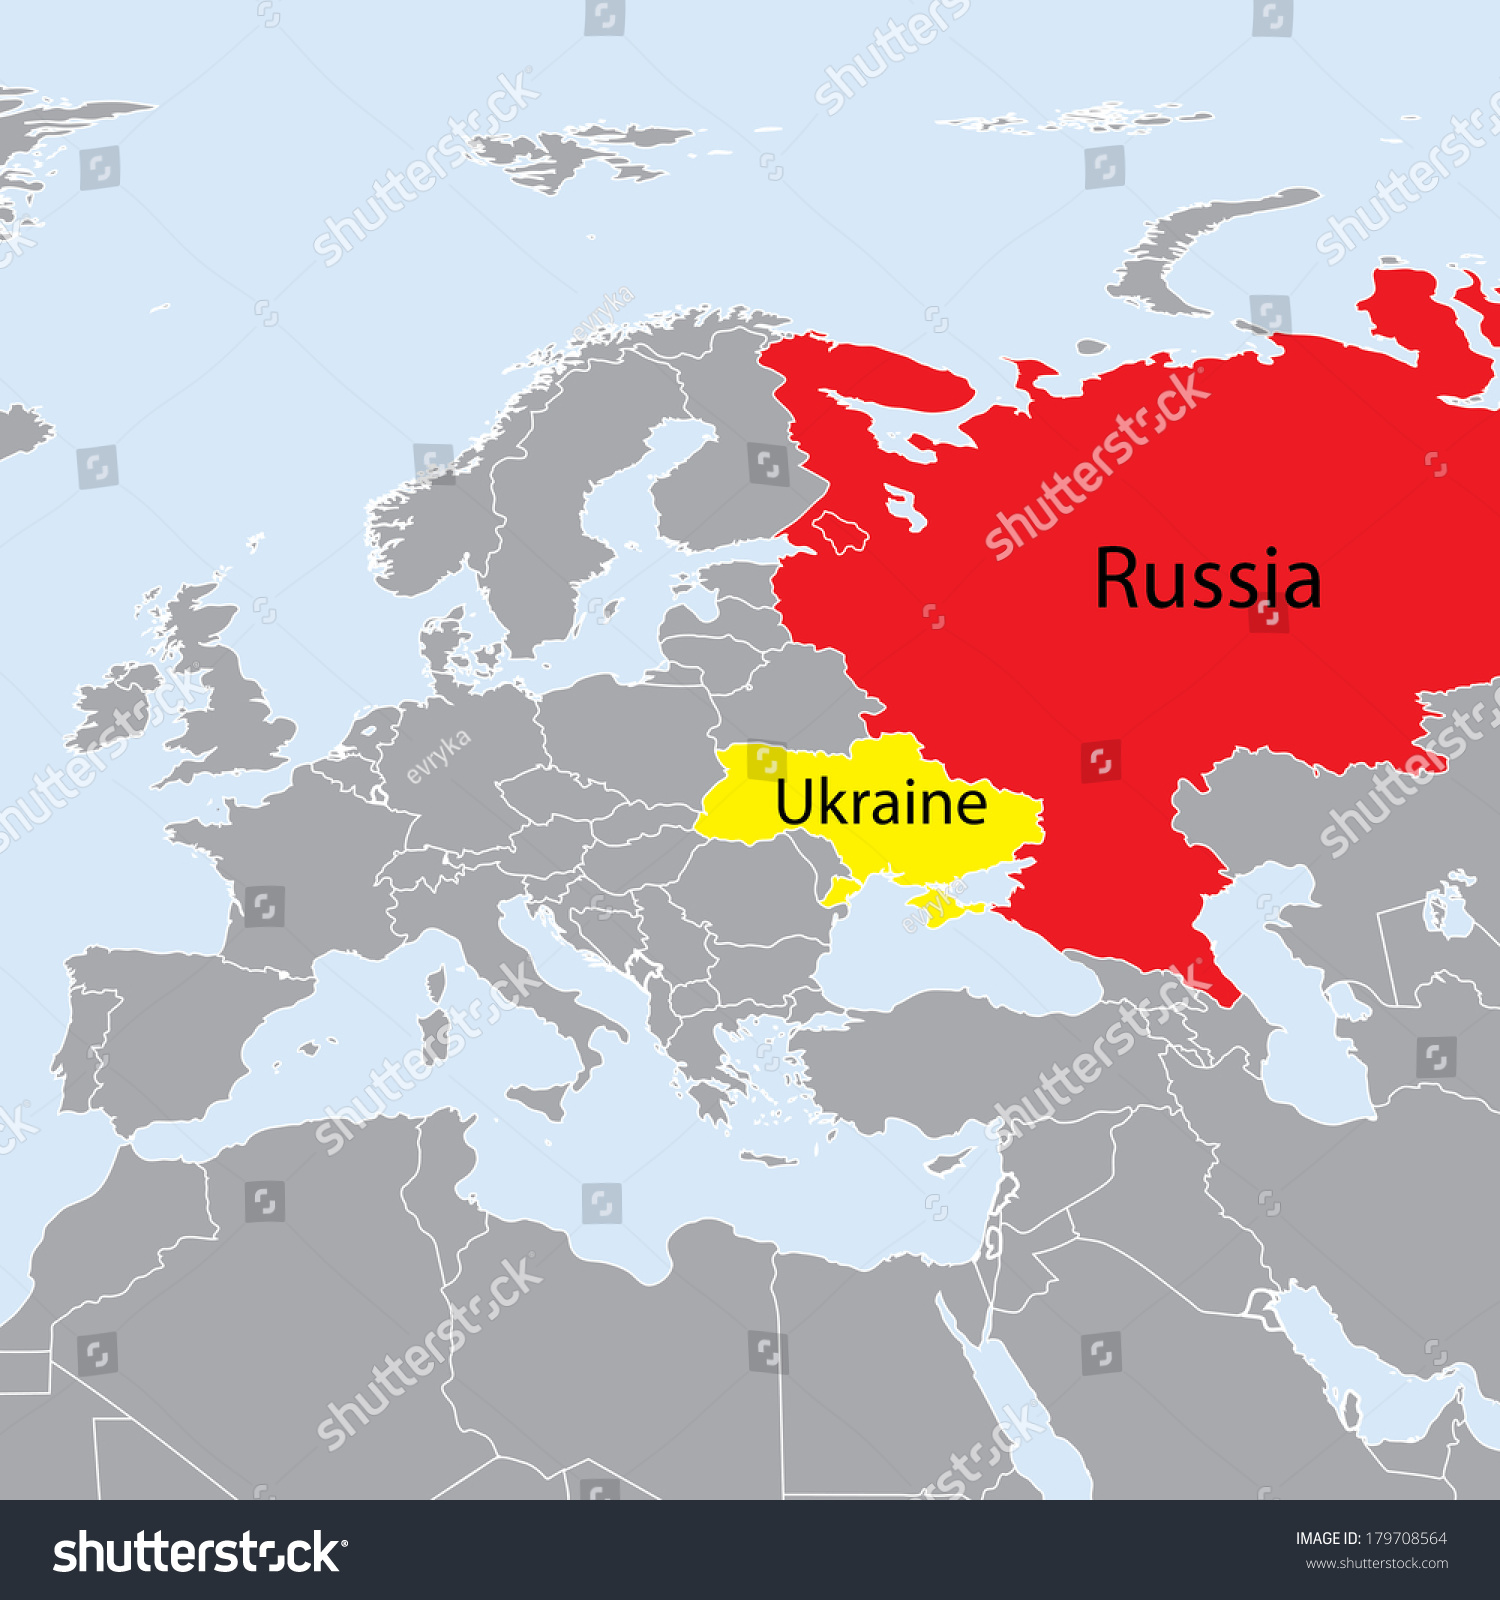 World russia map Russia Threatens